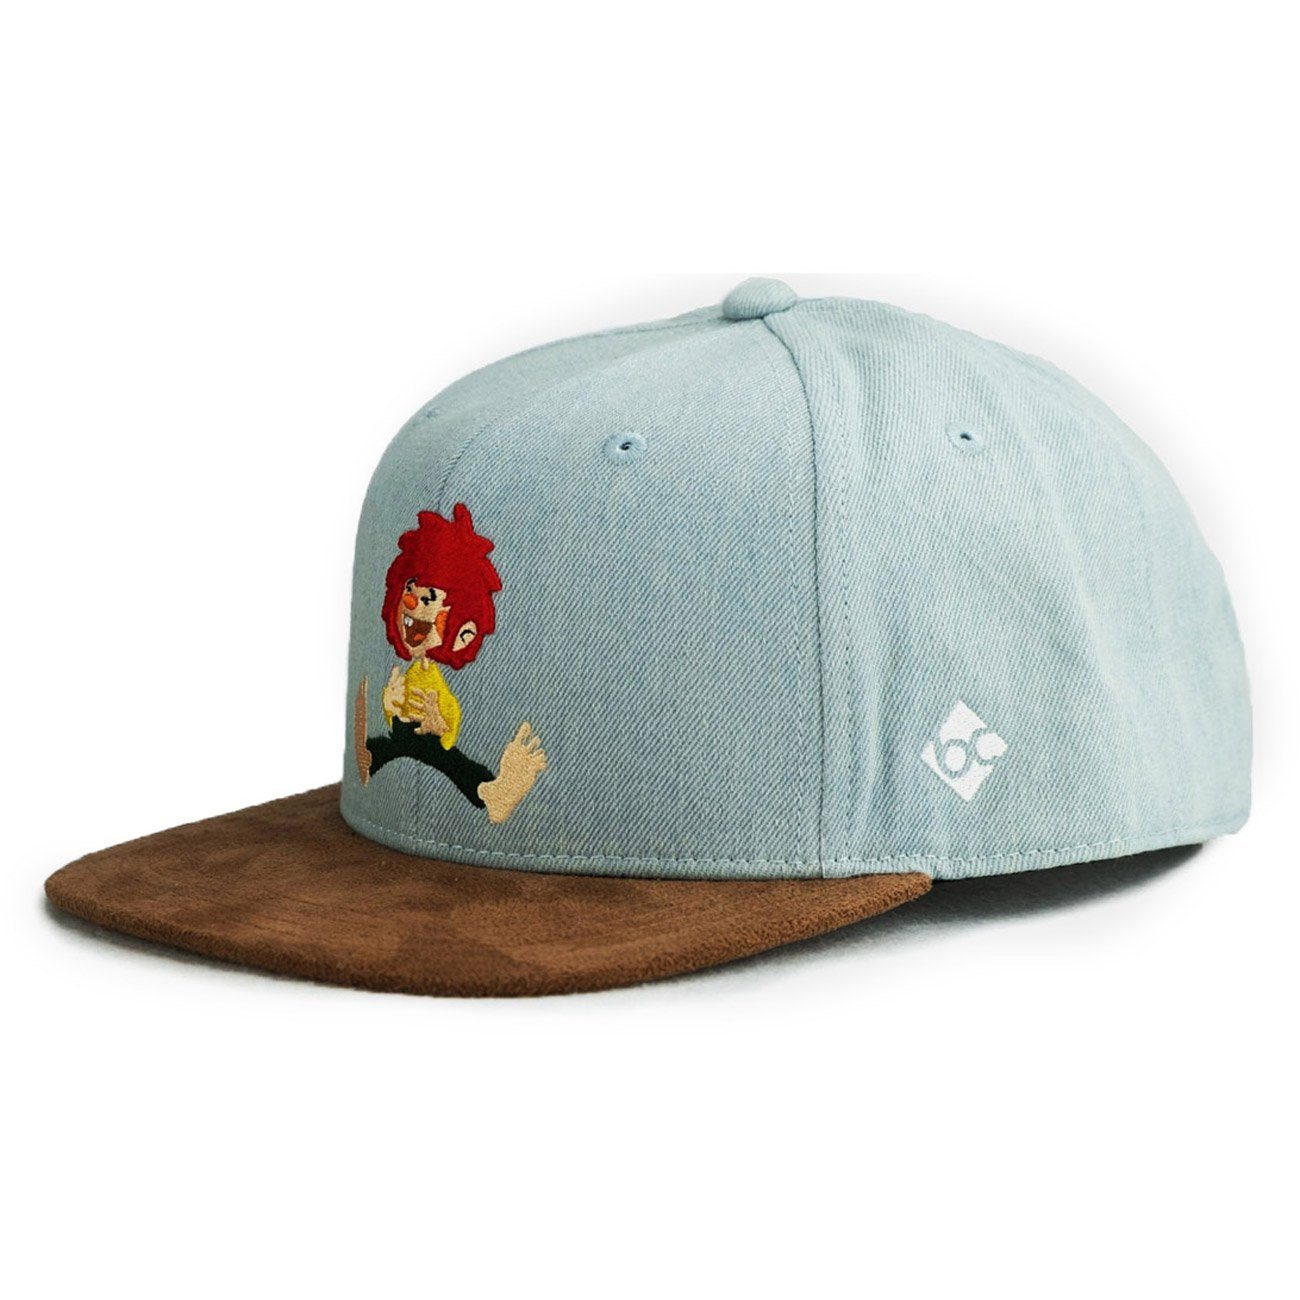 Caps Cap Bavarian Baseball Pumuckl